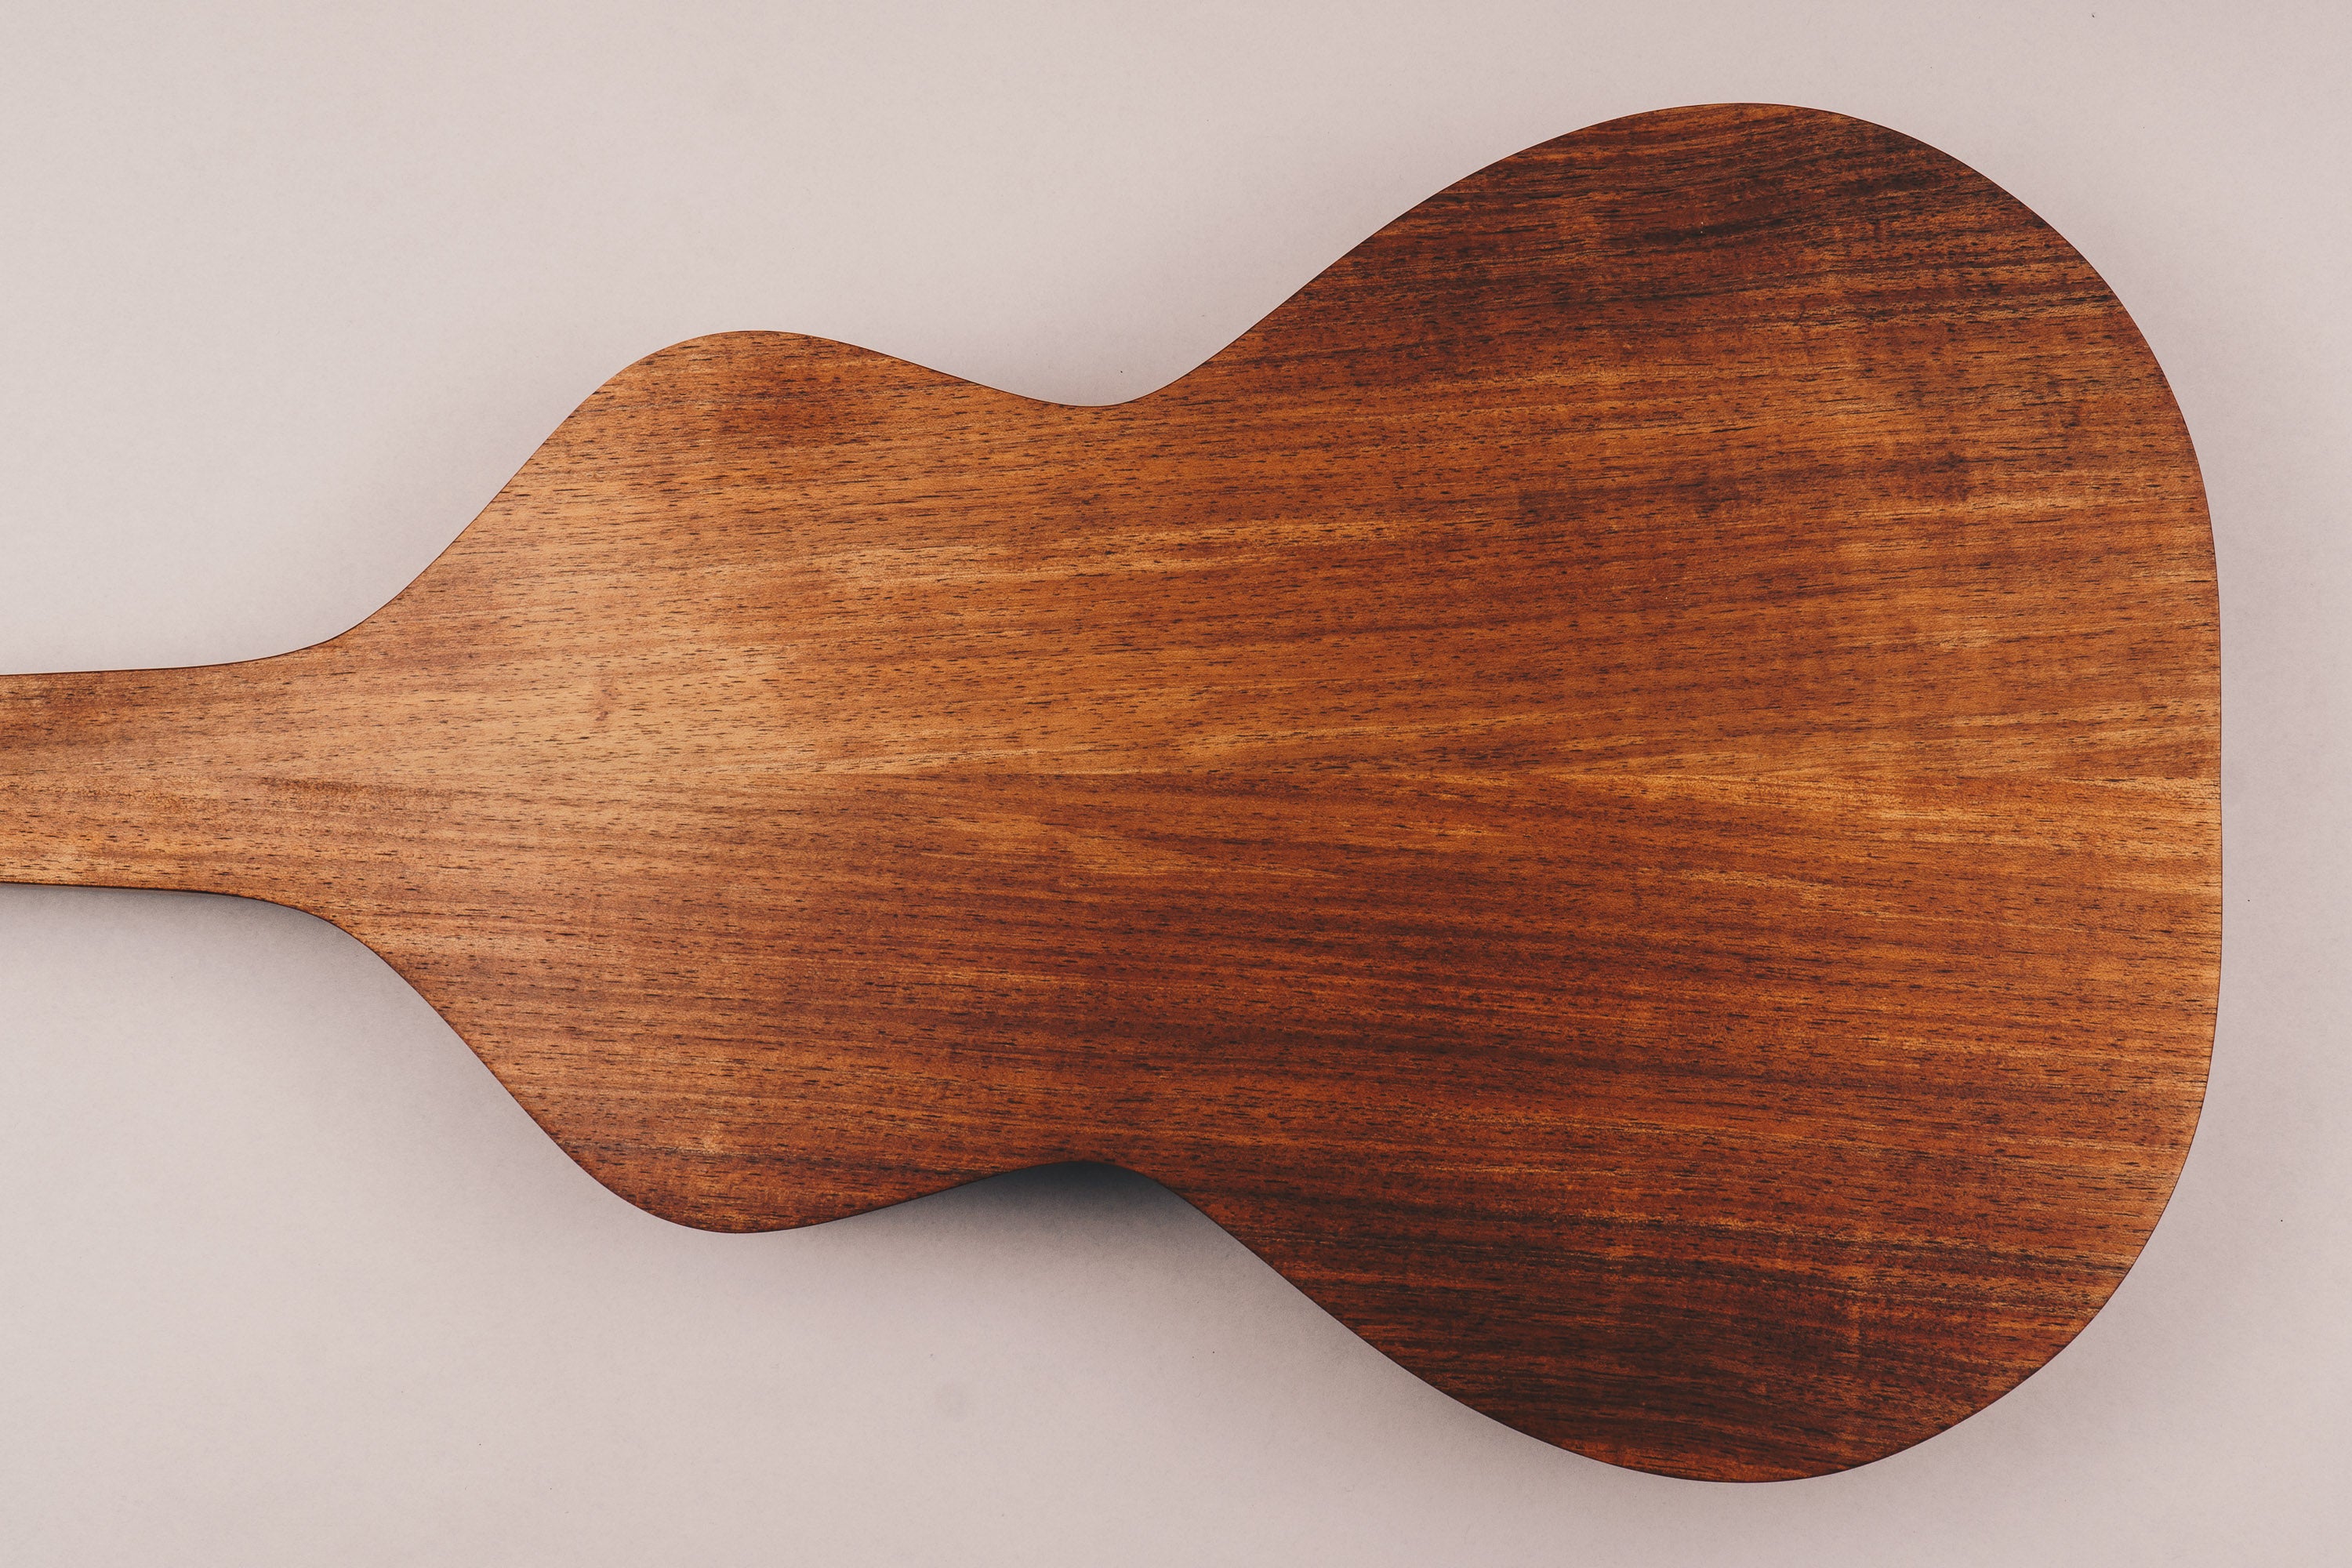 Style 1 Weissenborn Guitar Weissenborn Acoustic Lap Steel Slide Guitar by master luthier Richard Wilson. Handcrafted in Australia. Serial no. RW2117-306.